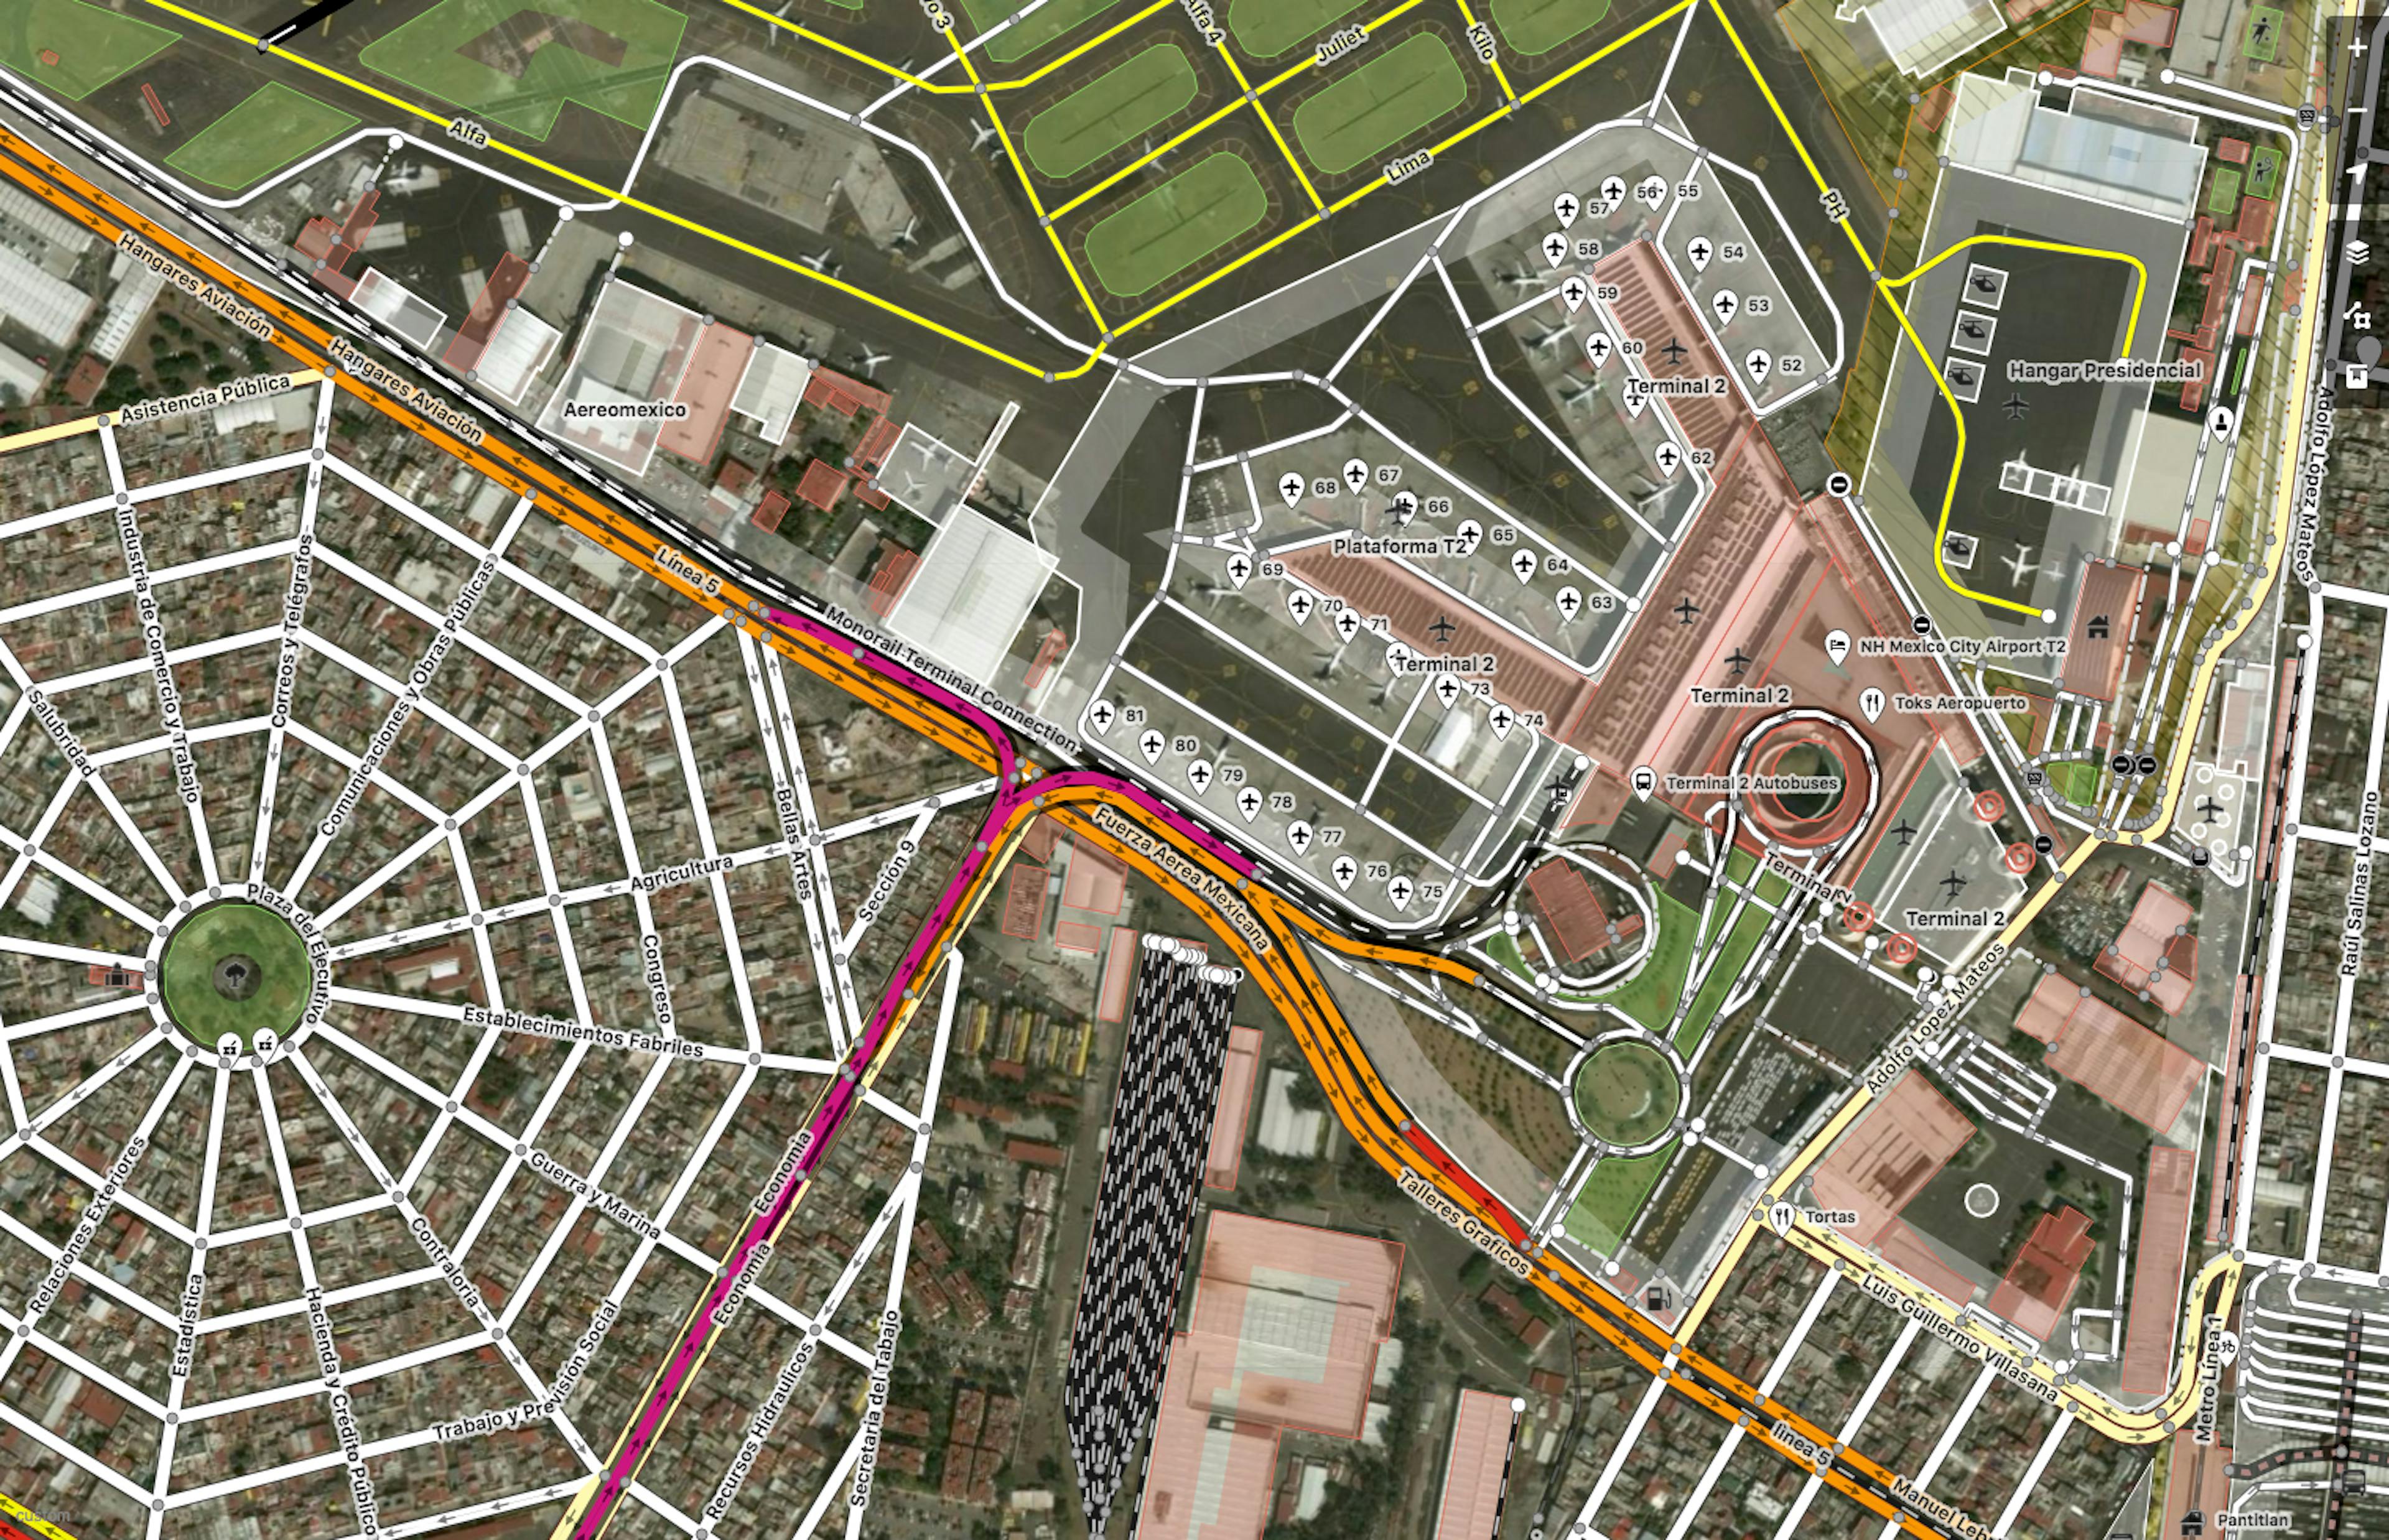 OpenStreetMap 的 DigitalGlobe 卫星图像发射